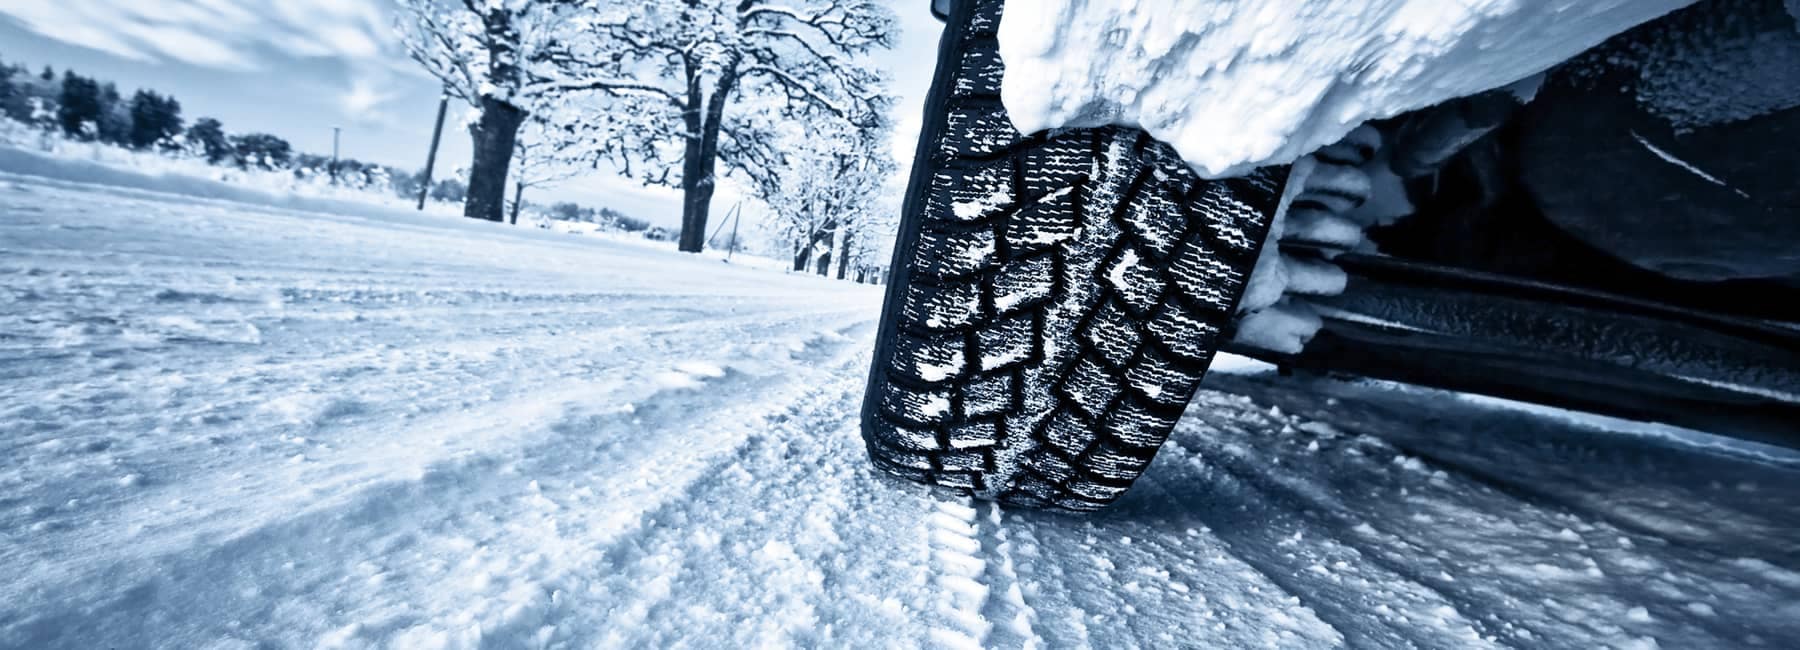 Winter Tires in snow